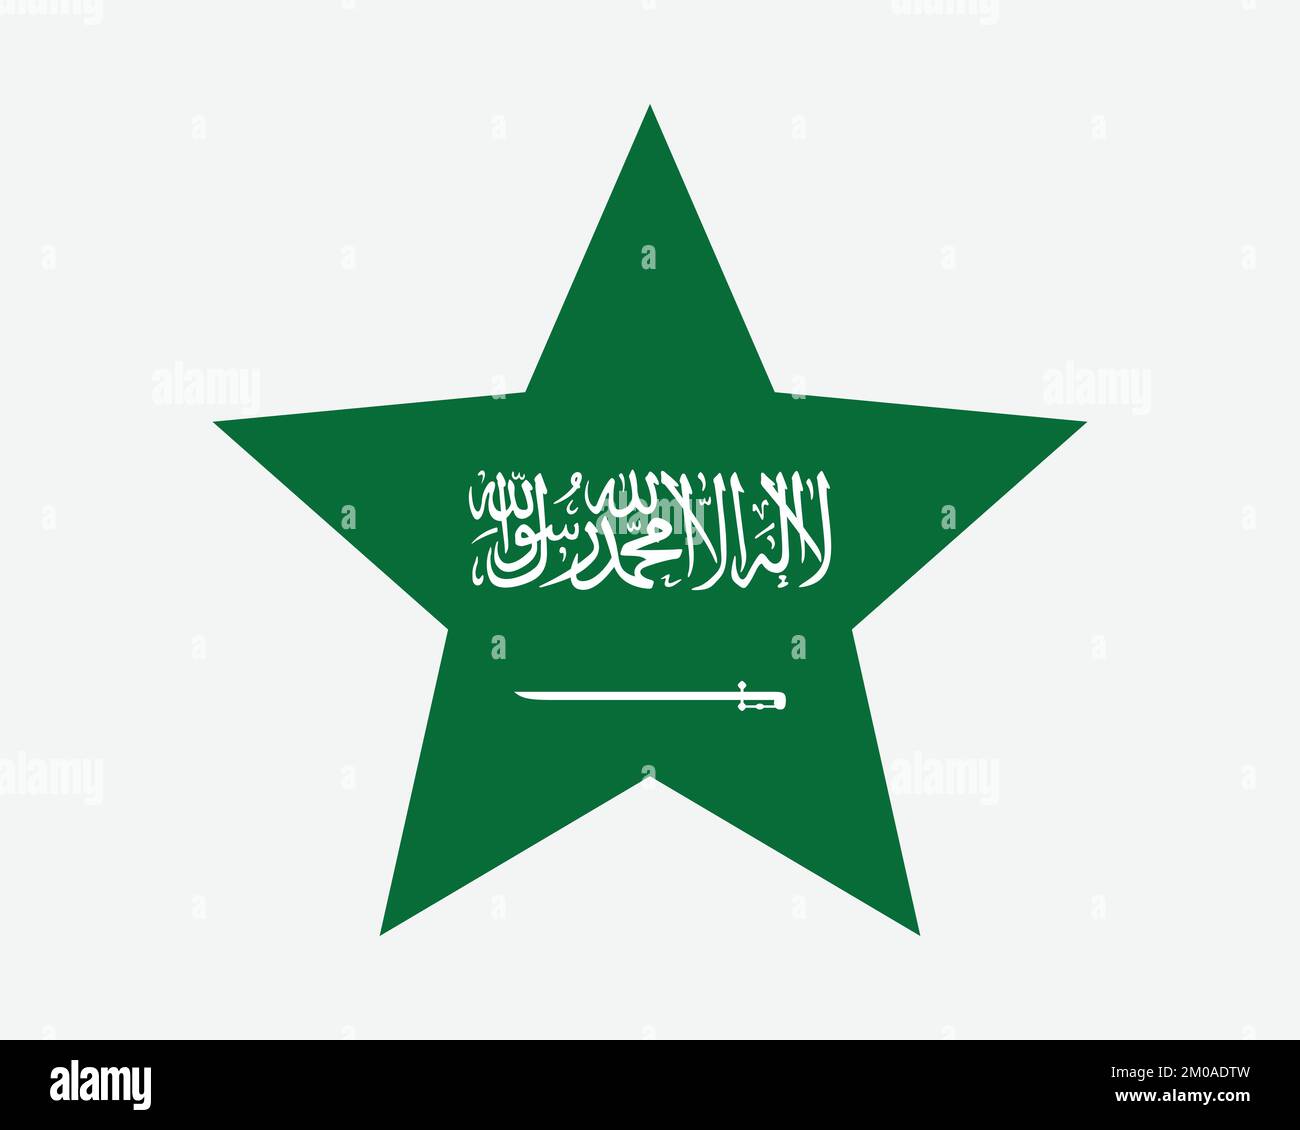 Saudi Arabia Star Flag. Saudi Arabian Star Shape Flag. KSA Country National Banner Icon Symbol Vector Flat Artwork Graphic Illustration Stock Vector